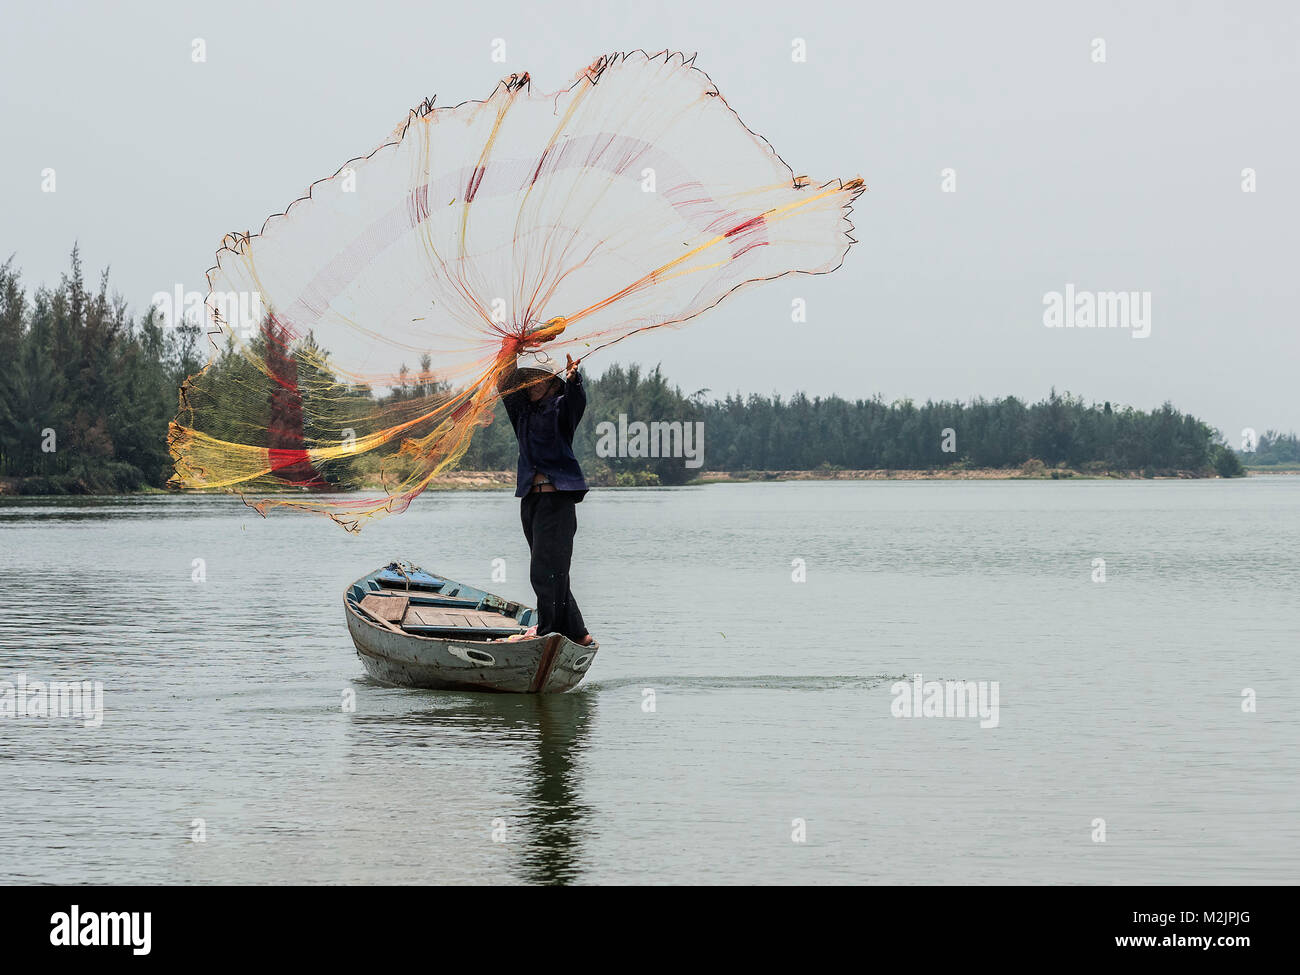 https://c8.alamy.com/comp/M2JPJG/vietnamese-man-casting-a-fishing-net-from-a-small-boat-on-the-river-M2JPJG.jpg